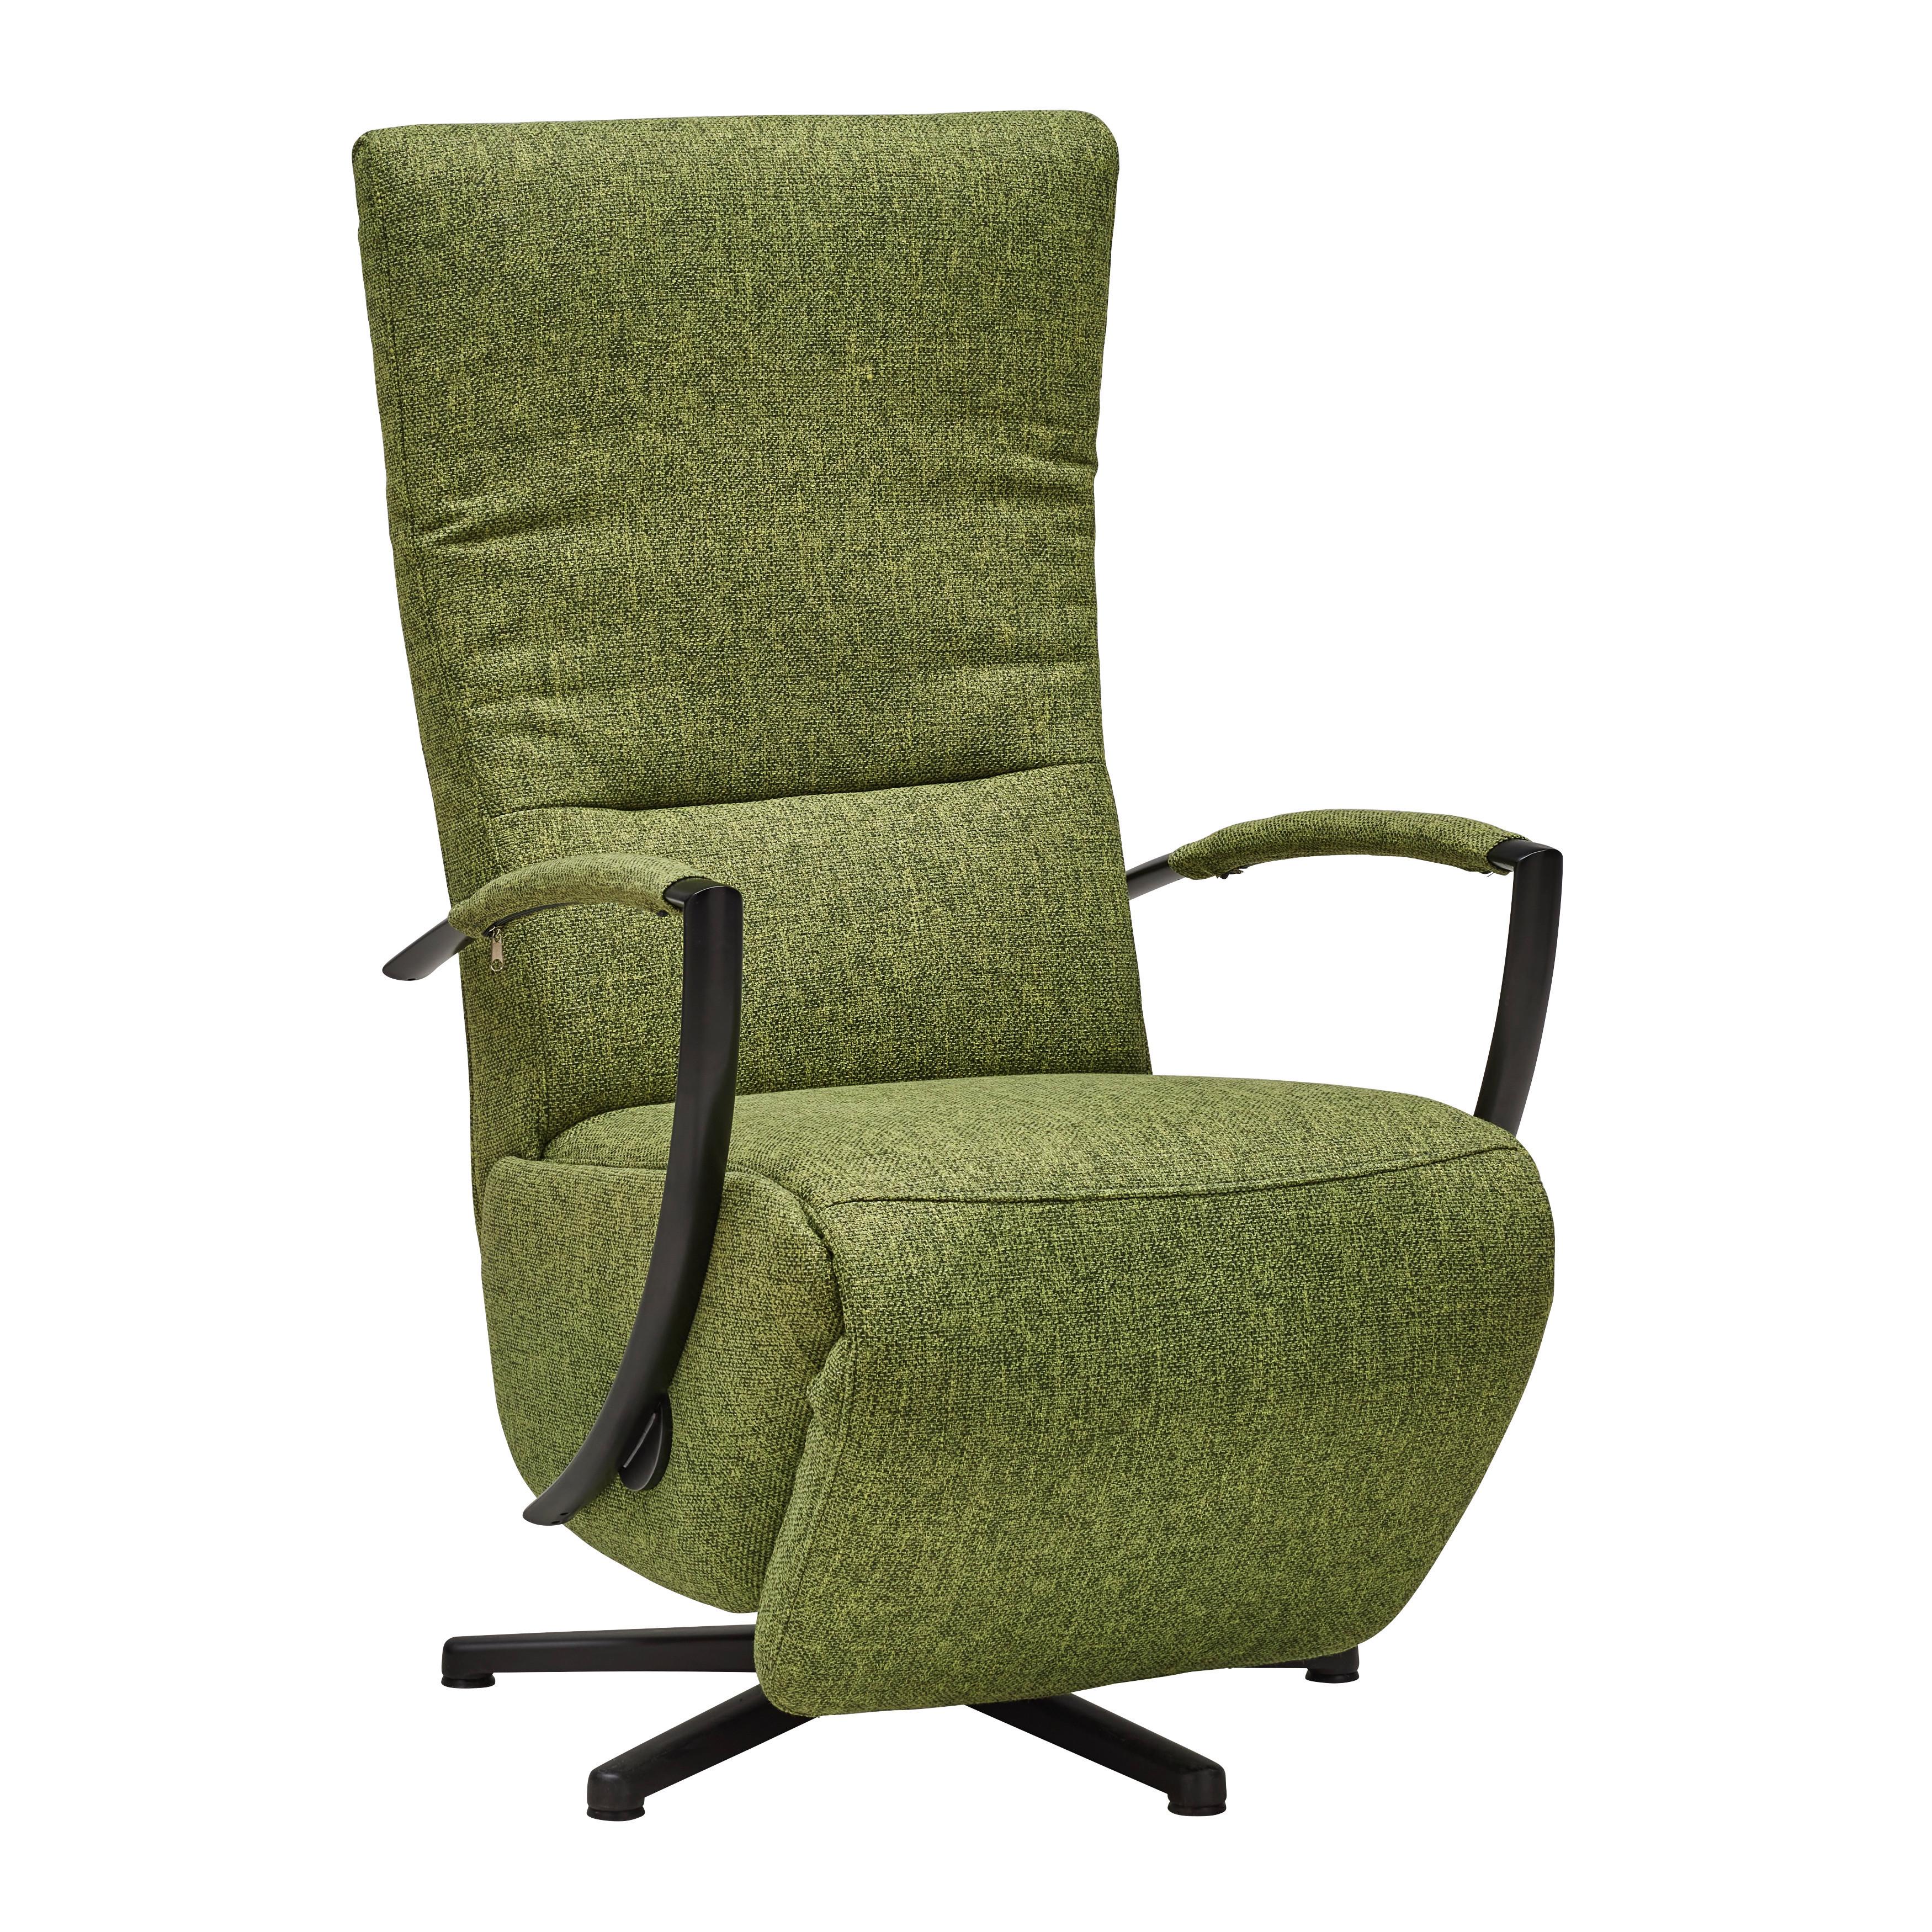 Relaxsessel Sitting 3 in Olive - Schwarz/Olivgrün, MODERN, Kunststoff (66/114/84cm) - Premium Living